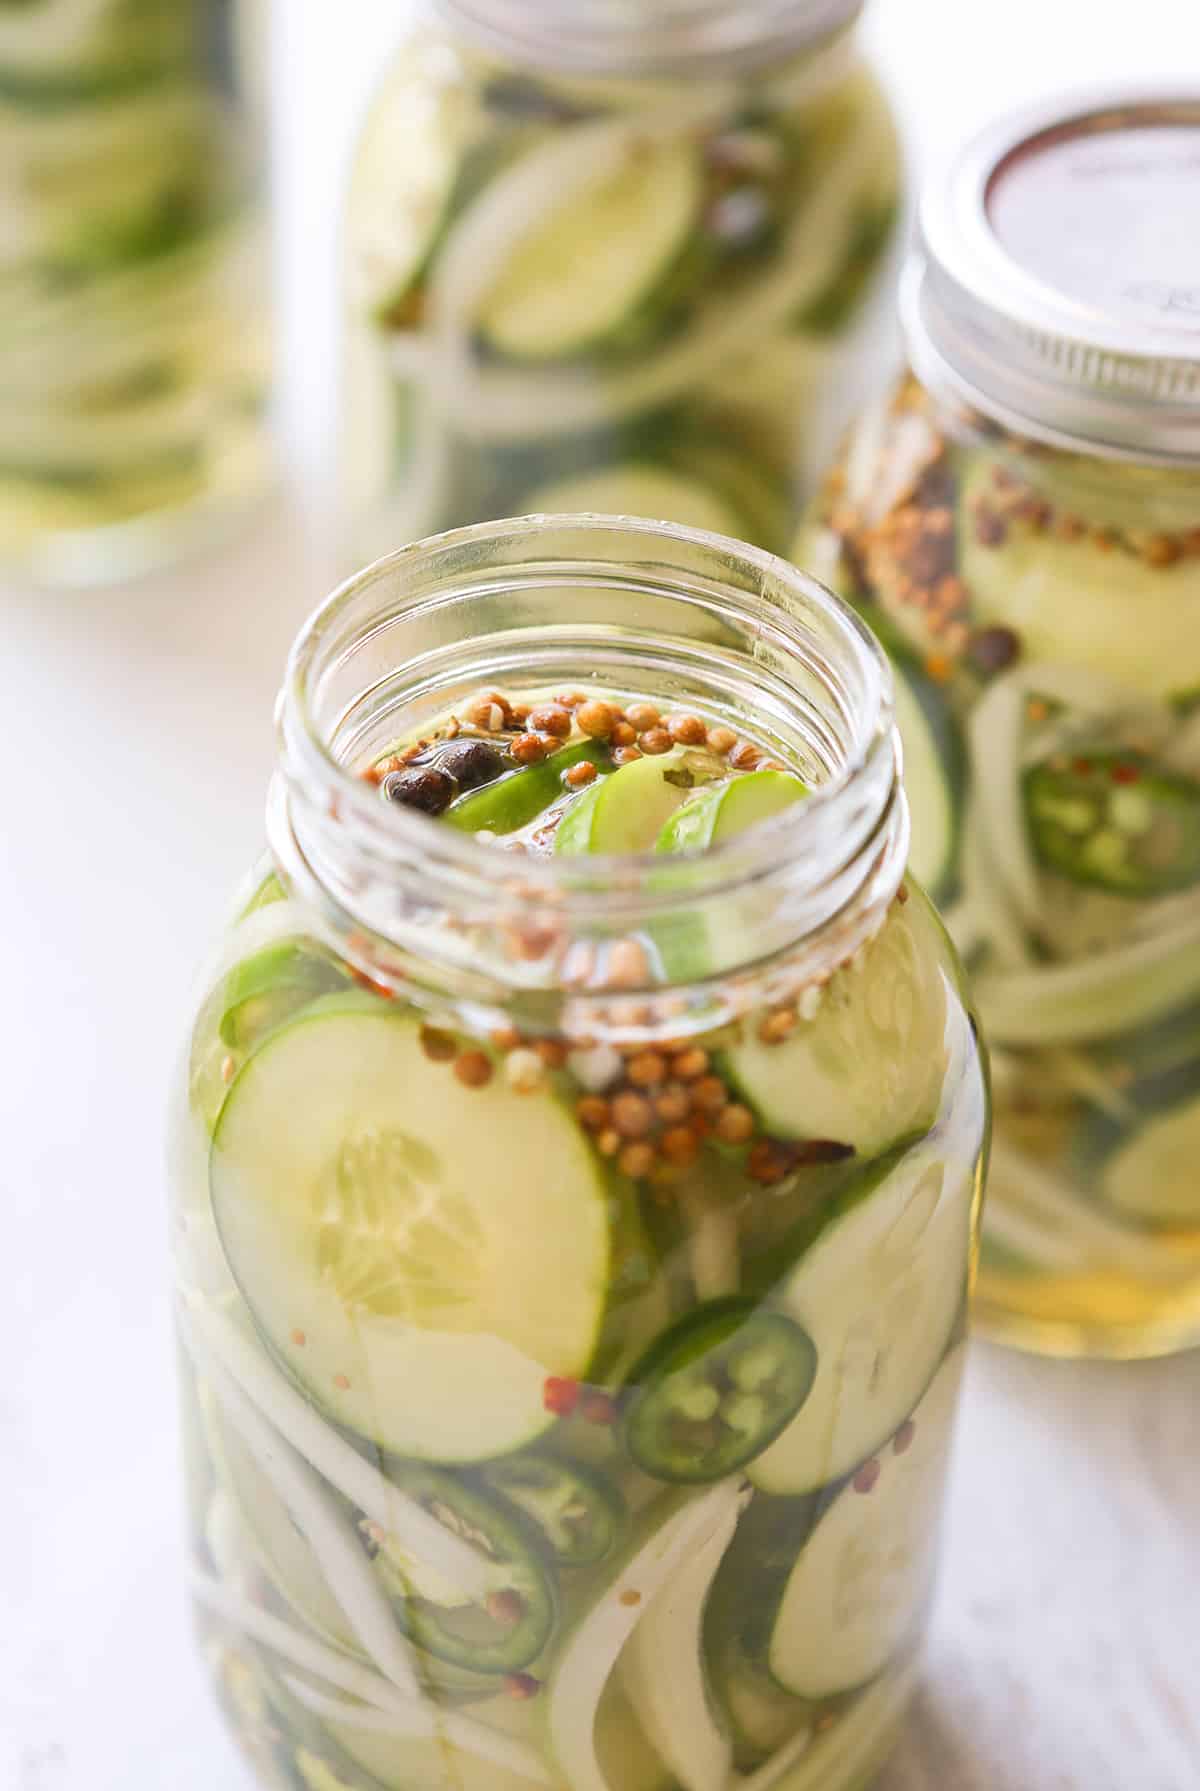 Mason jar full of refrigerated sweet pickles.